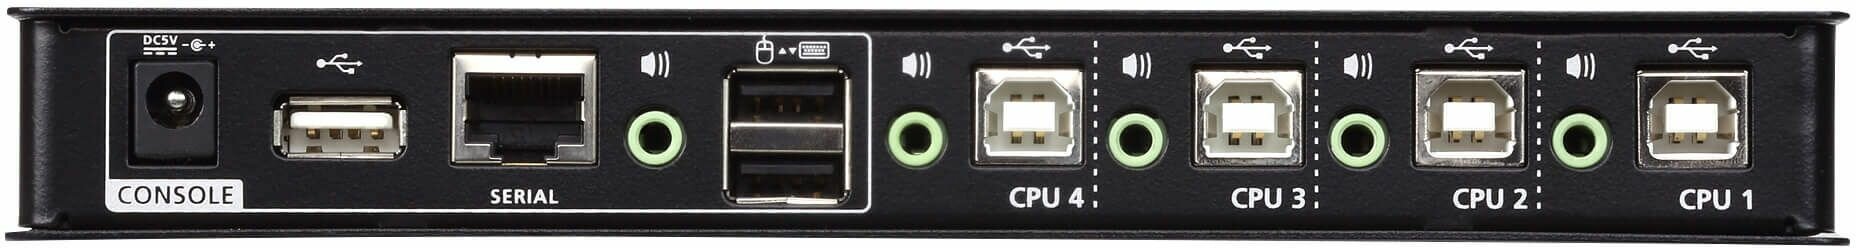 Устройство Aten 4-Port USB Boundless KM Switch